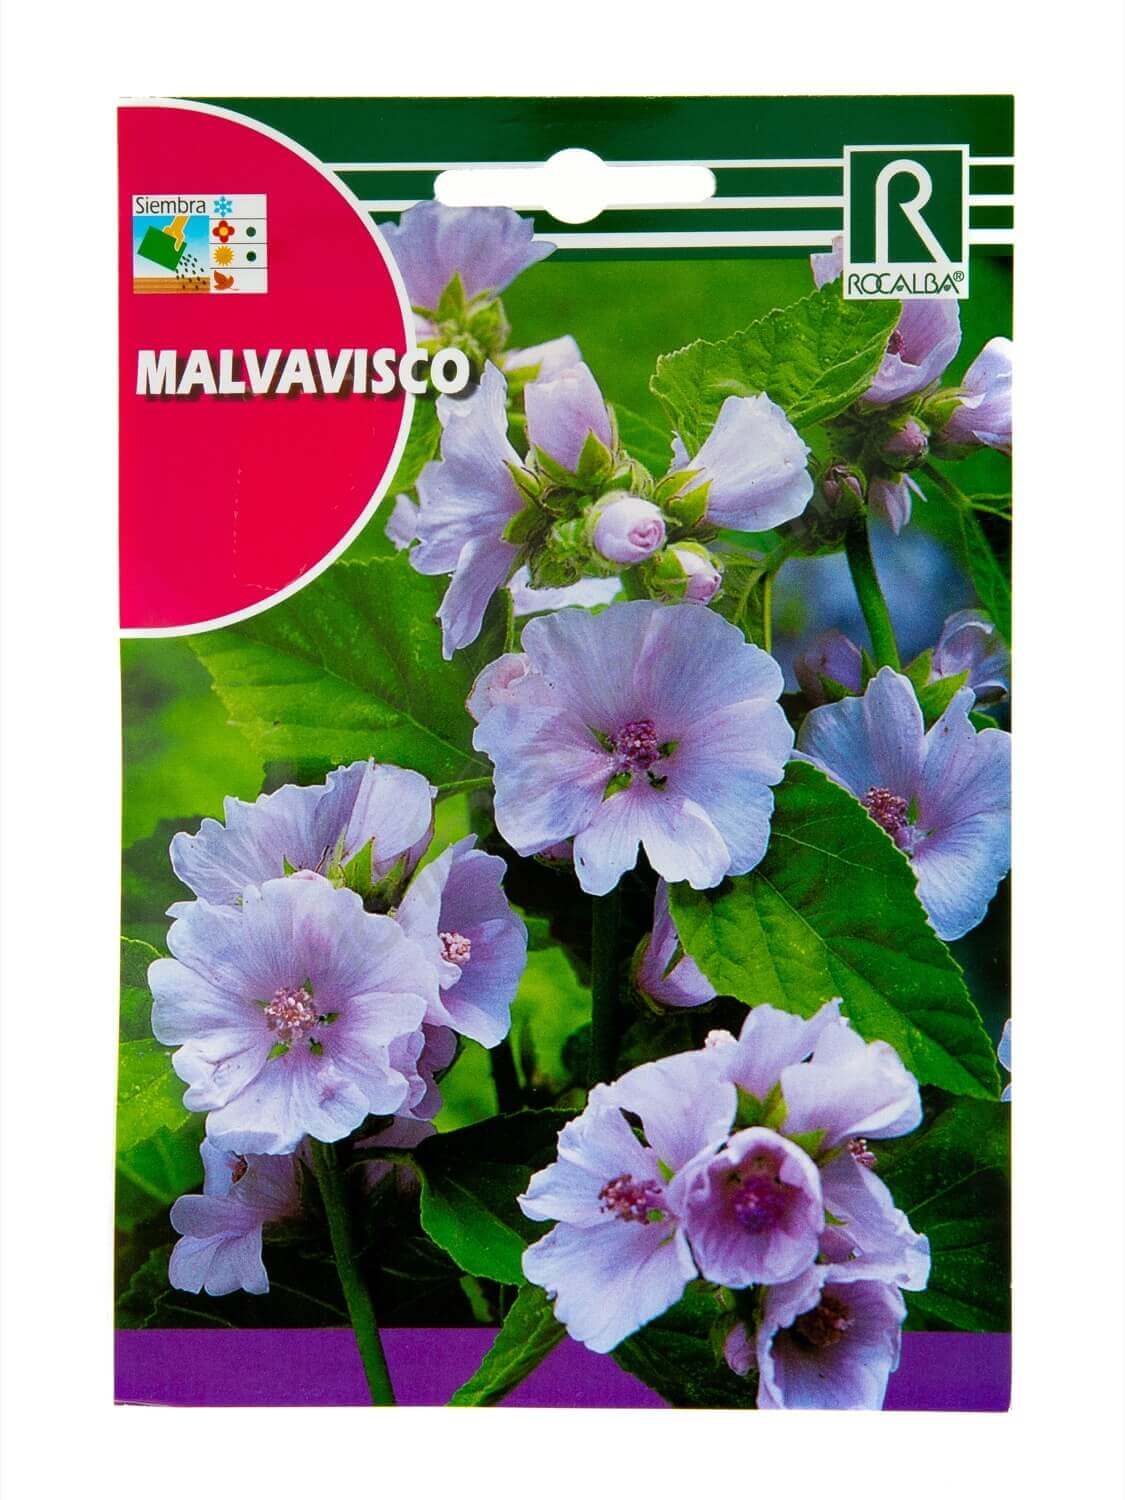 Malvavisco - Rocalba